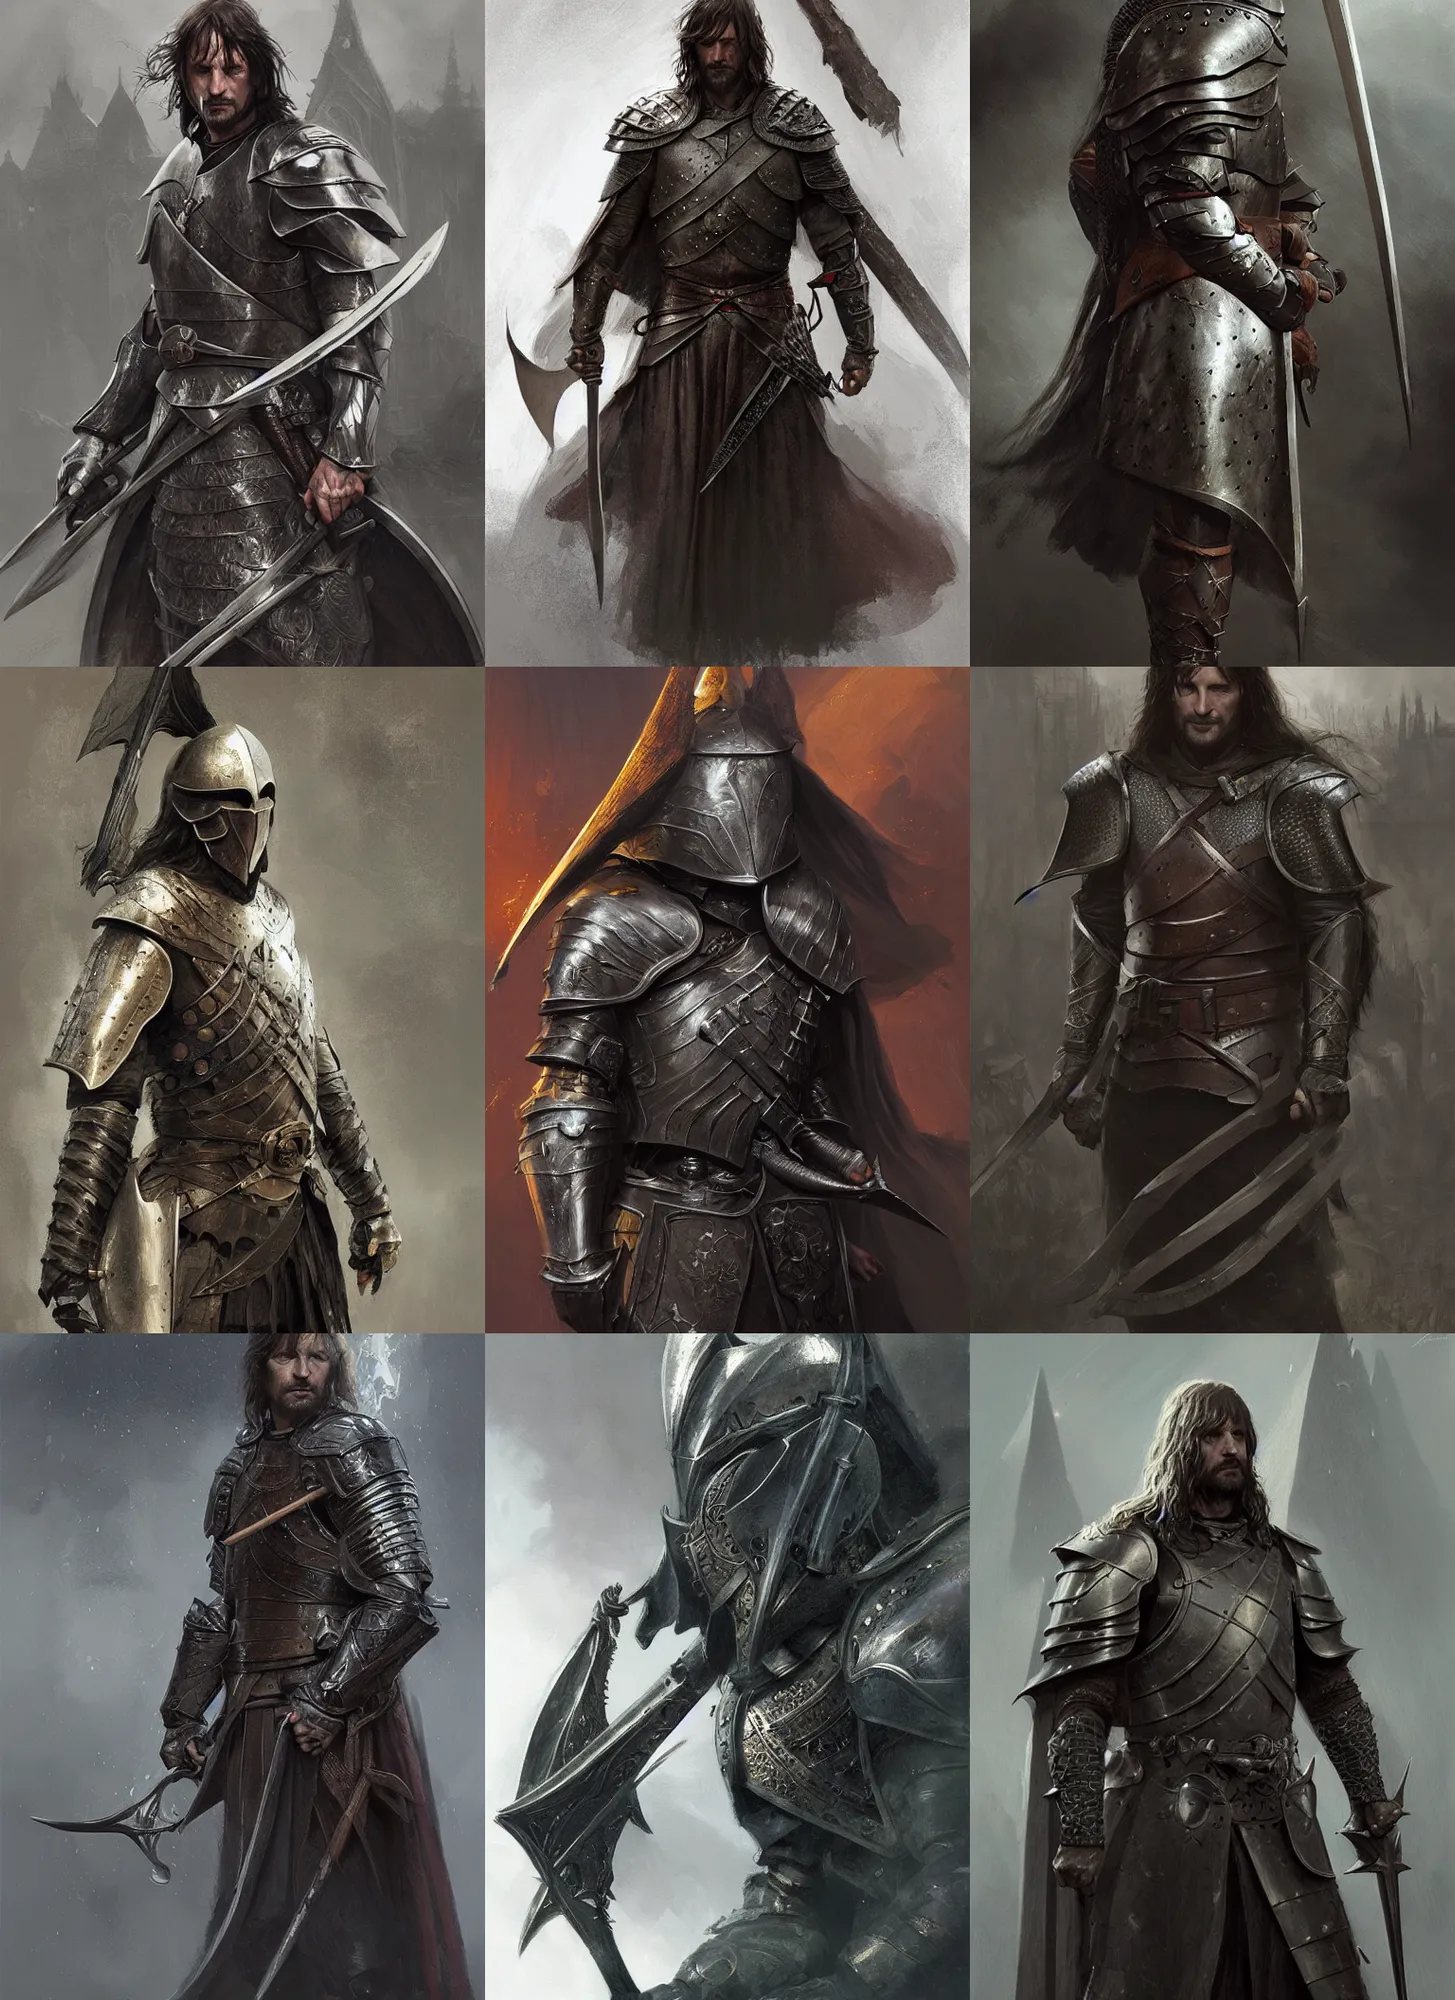 Prompt: aragorn medieval armor, dark, intricate, highly detailed, smooth, artstation, digital illustration, ruan jia, mandy jurgens, rutkowski